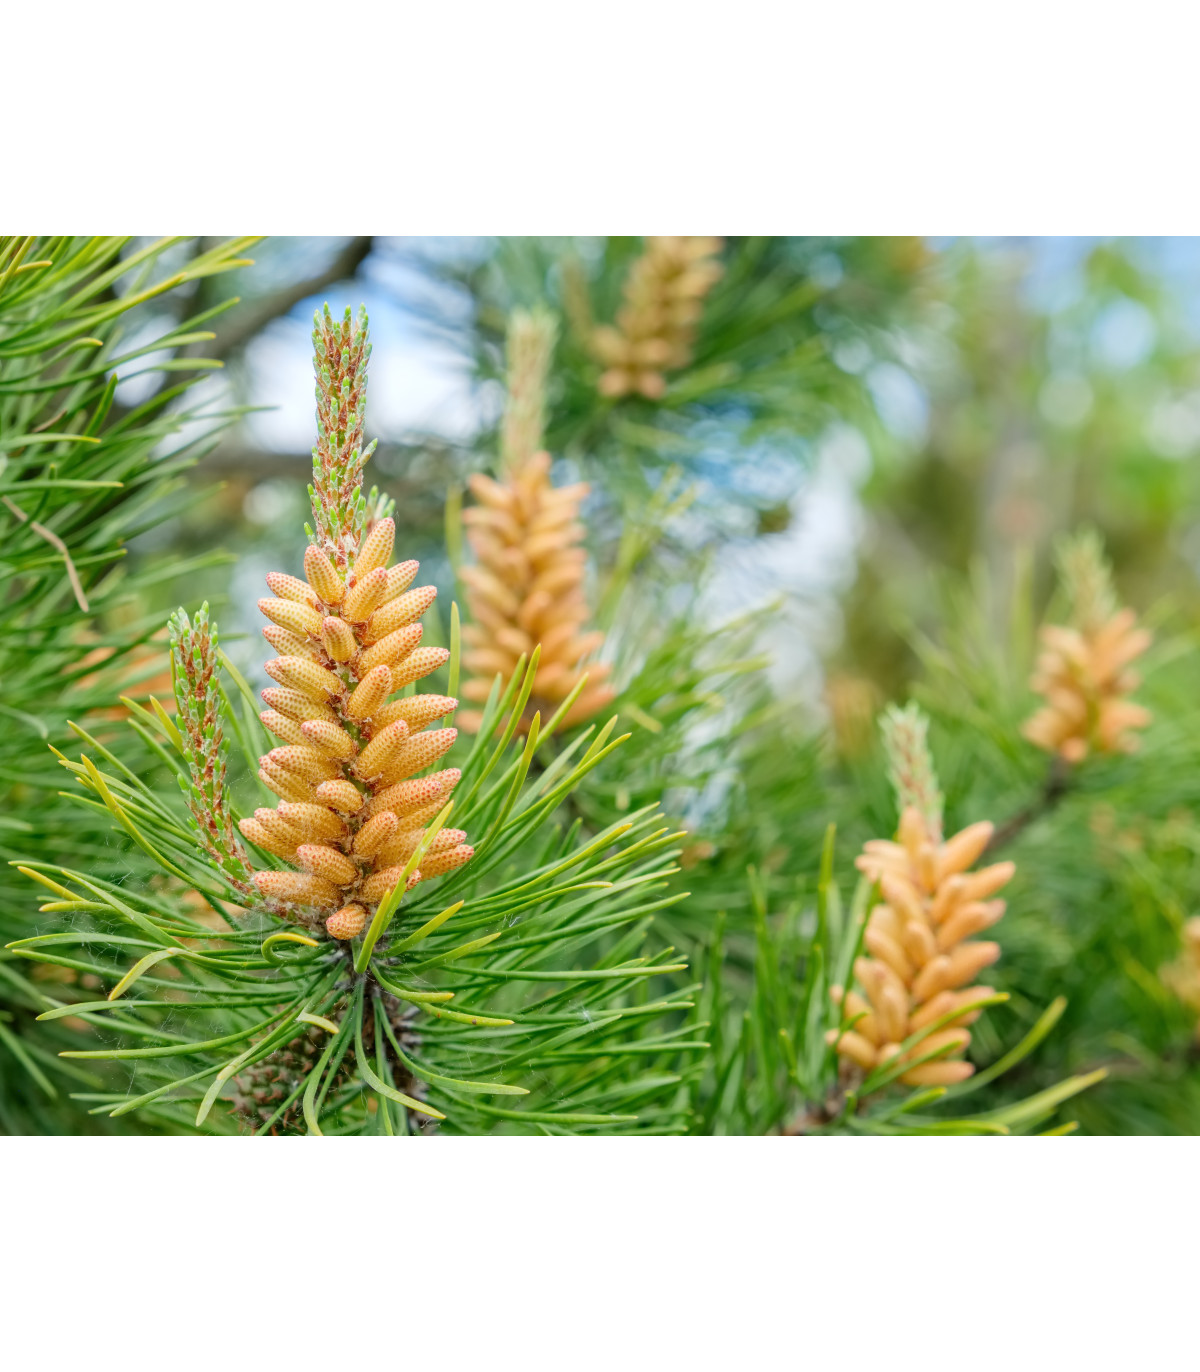 Borovica pokrútená-Pinus contorta-semená borovice-7 ks-